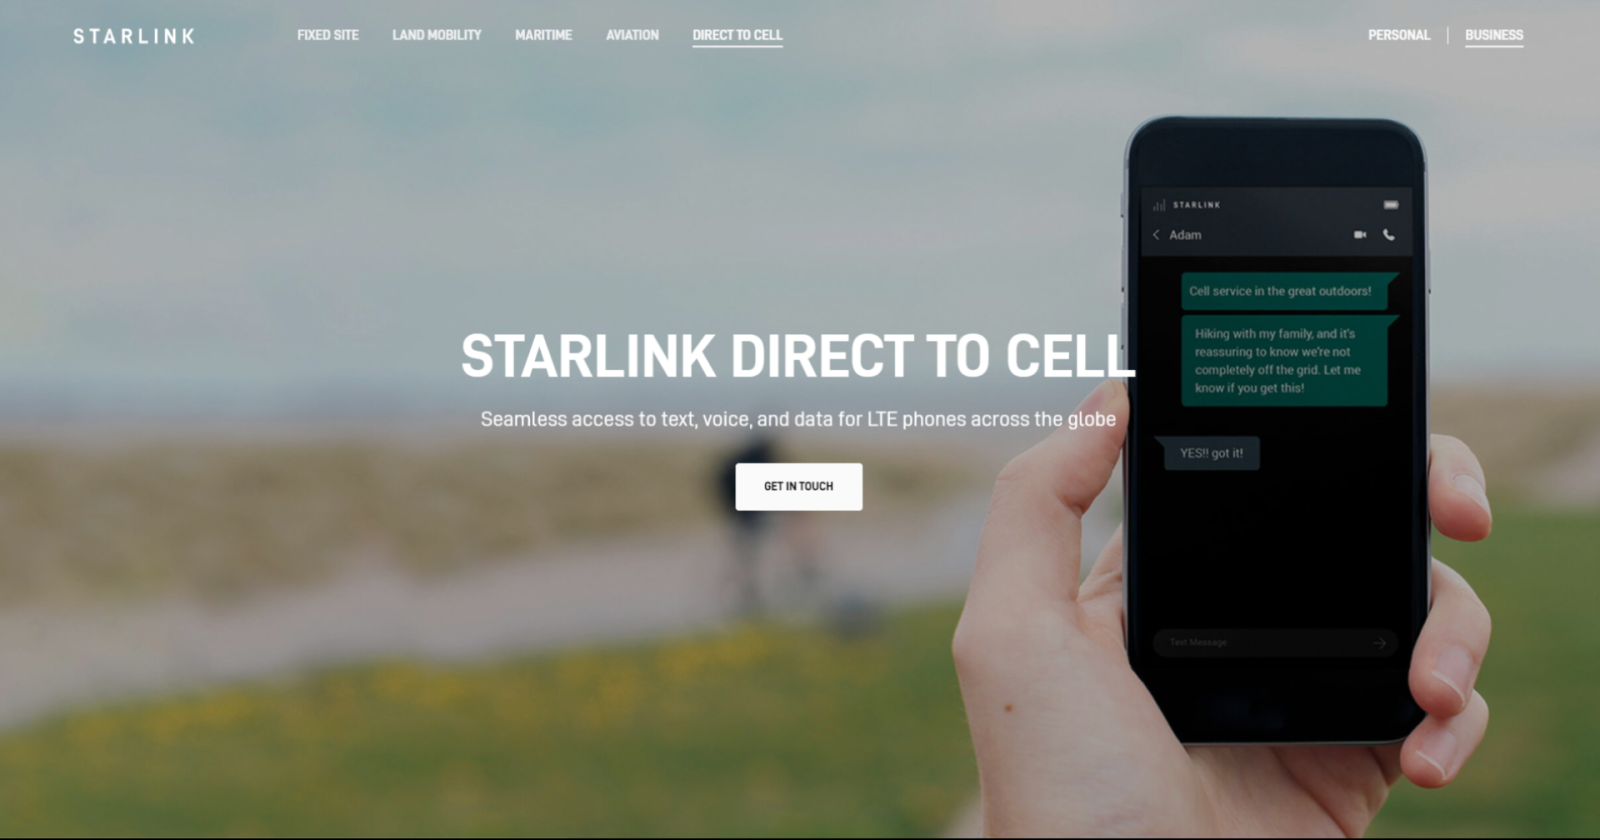 SpaceX ปล่อยหน้าเว็บโปรโมตบริการสื่อสารดาวเทียม Starlink ไปยังโทรศัพท์มือถือโดยตรง